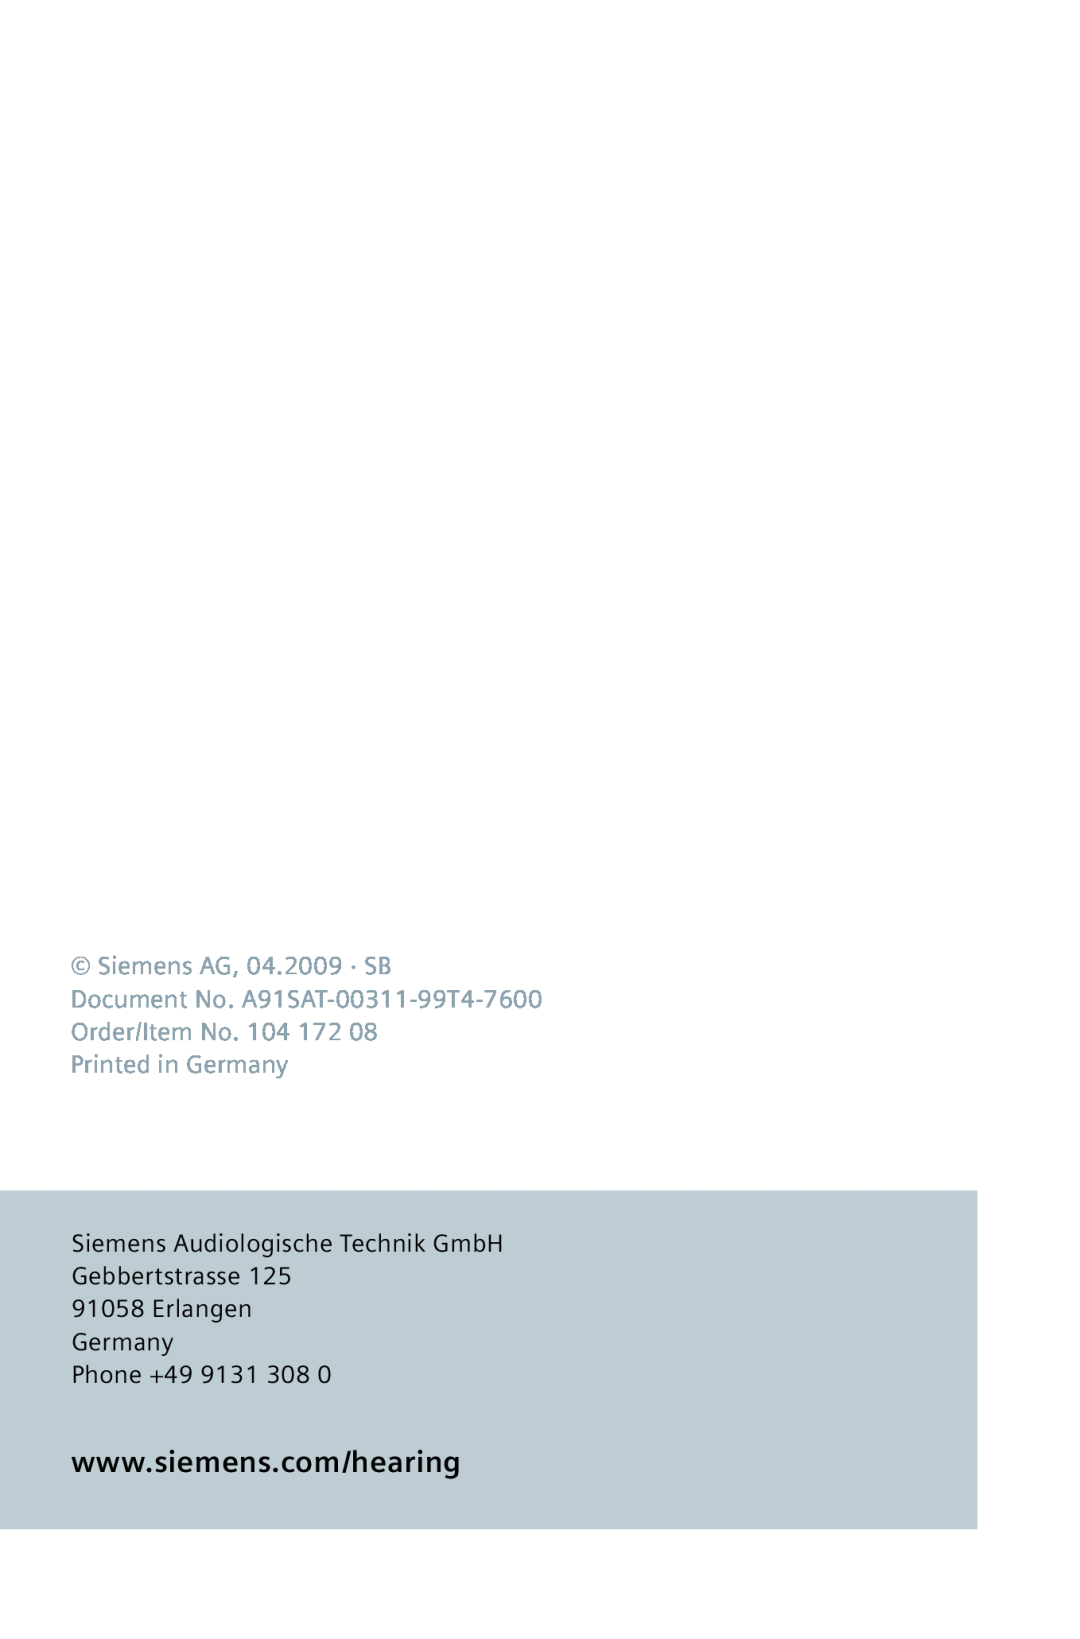 Siemens 500, 700 manual Siemens AG, 04.2009 · SB, Document No. A91SAT-00311-99T4-7600, Erlangen Germany Phone +49 